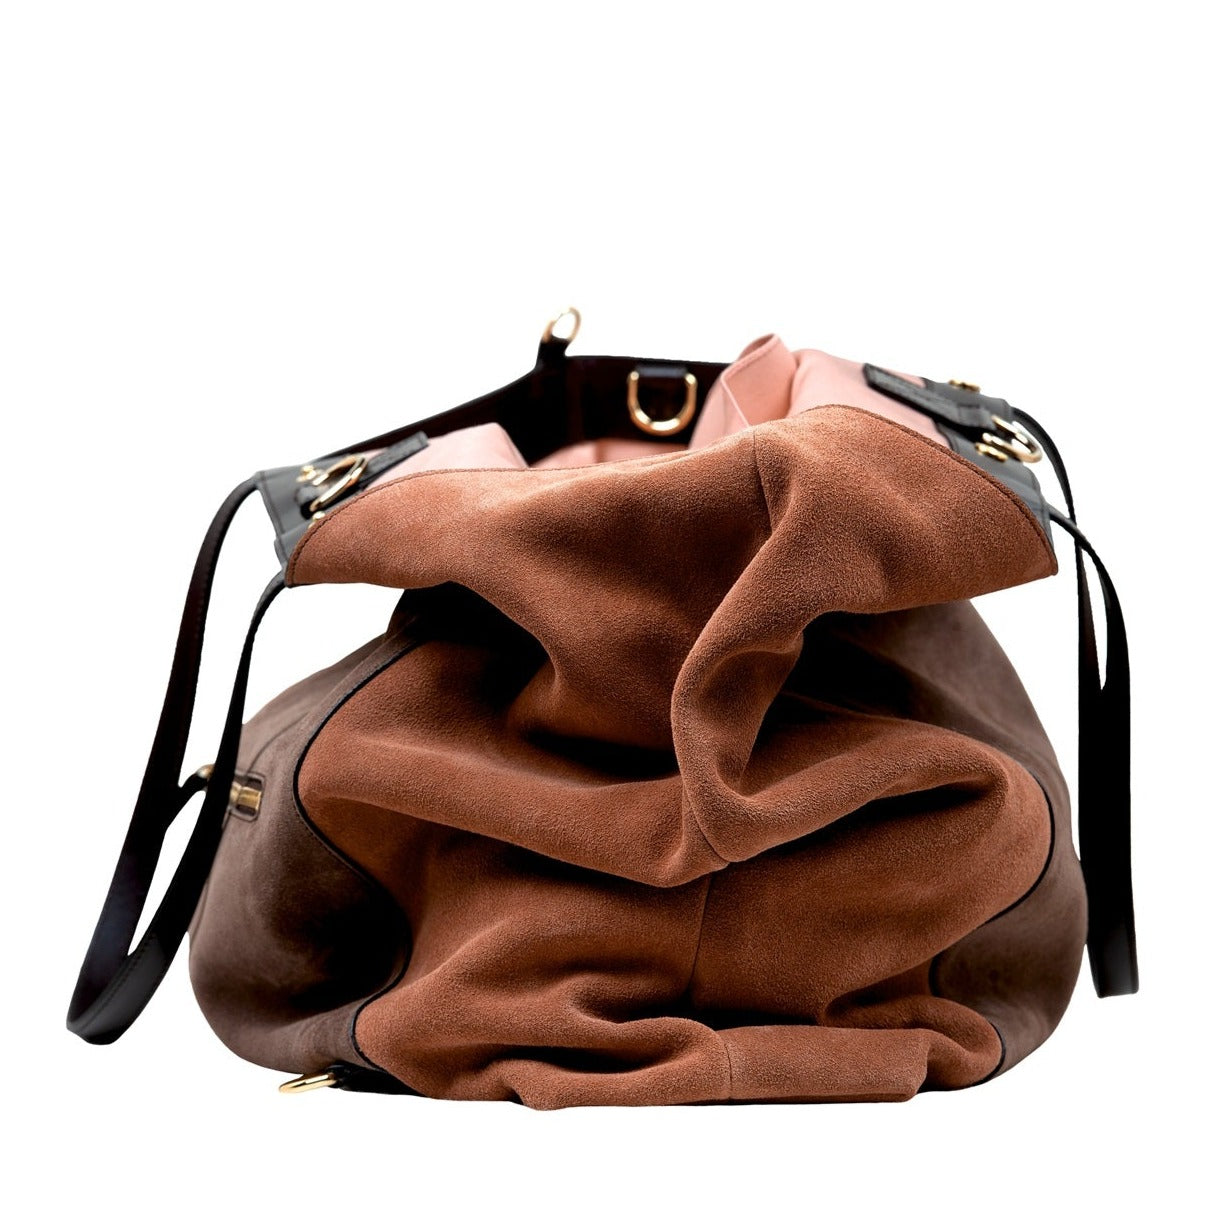 Everyday Maxi bag in brown suede I Bukvy bag